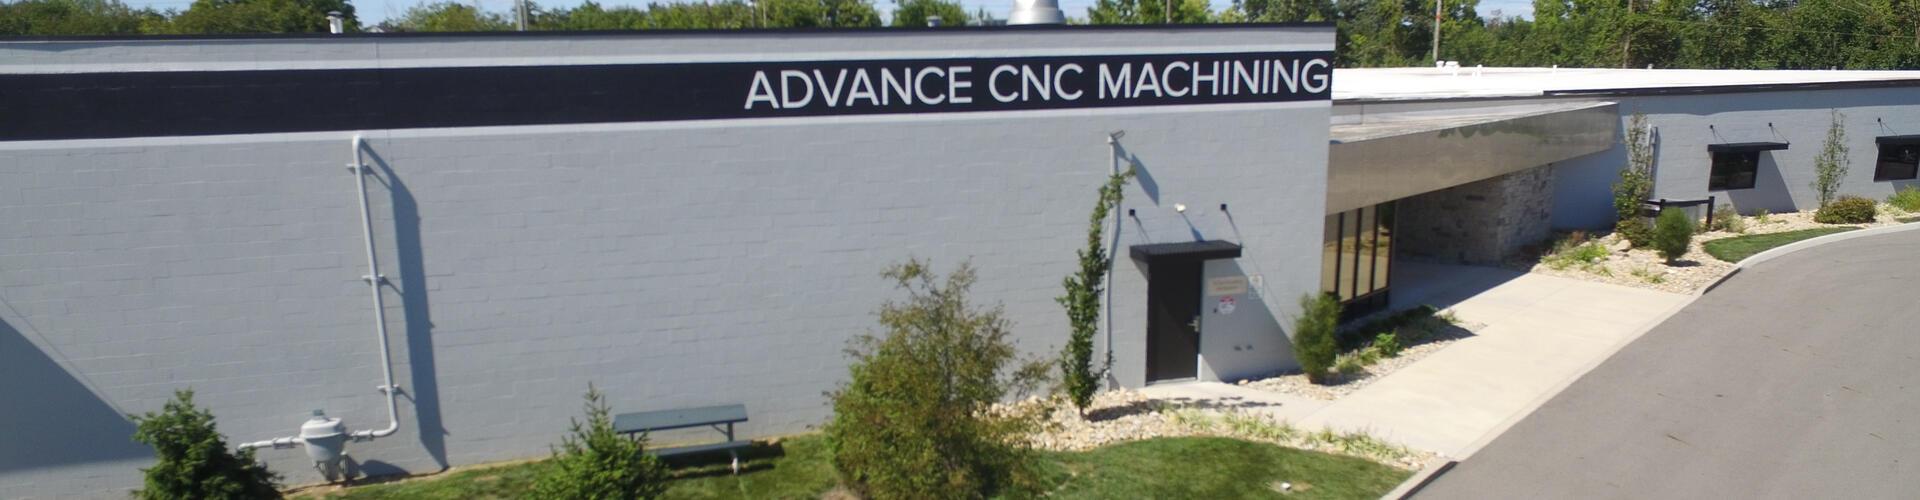 Advance CNC Machining cover